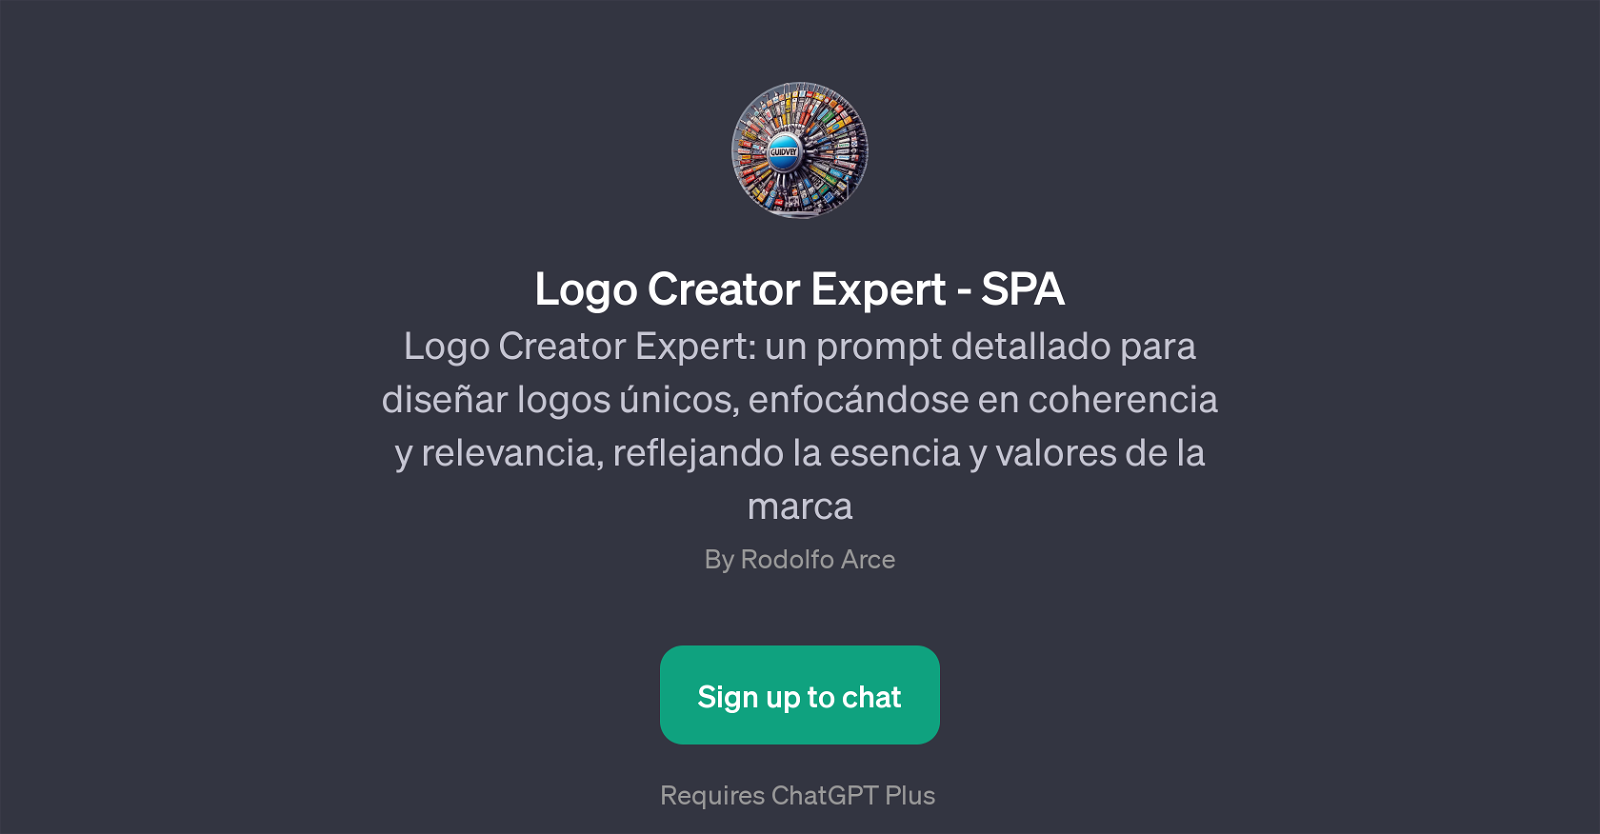 Logo Creator Expert - SPA website